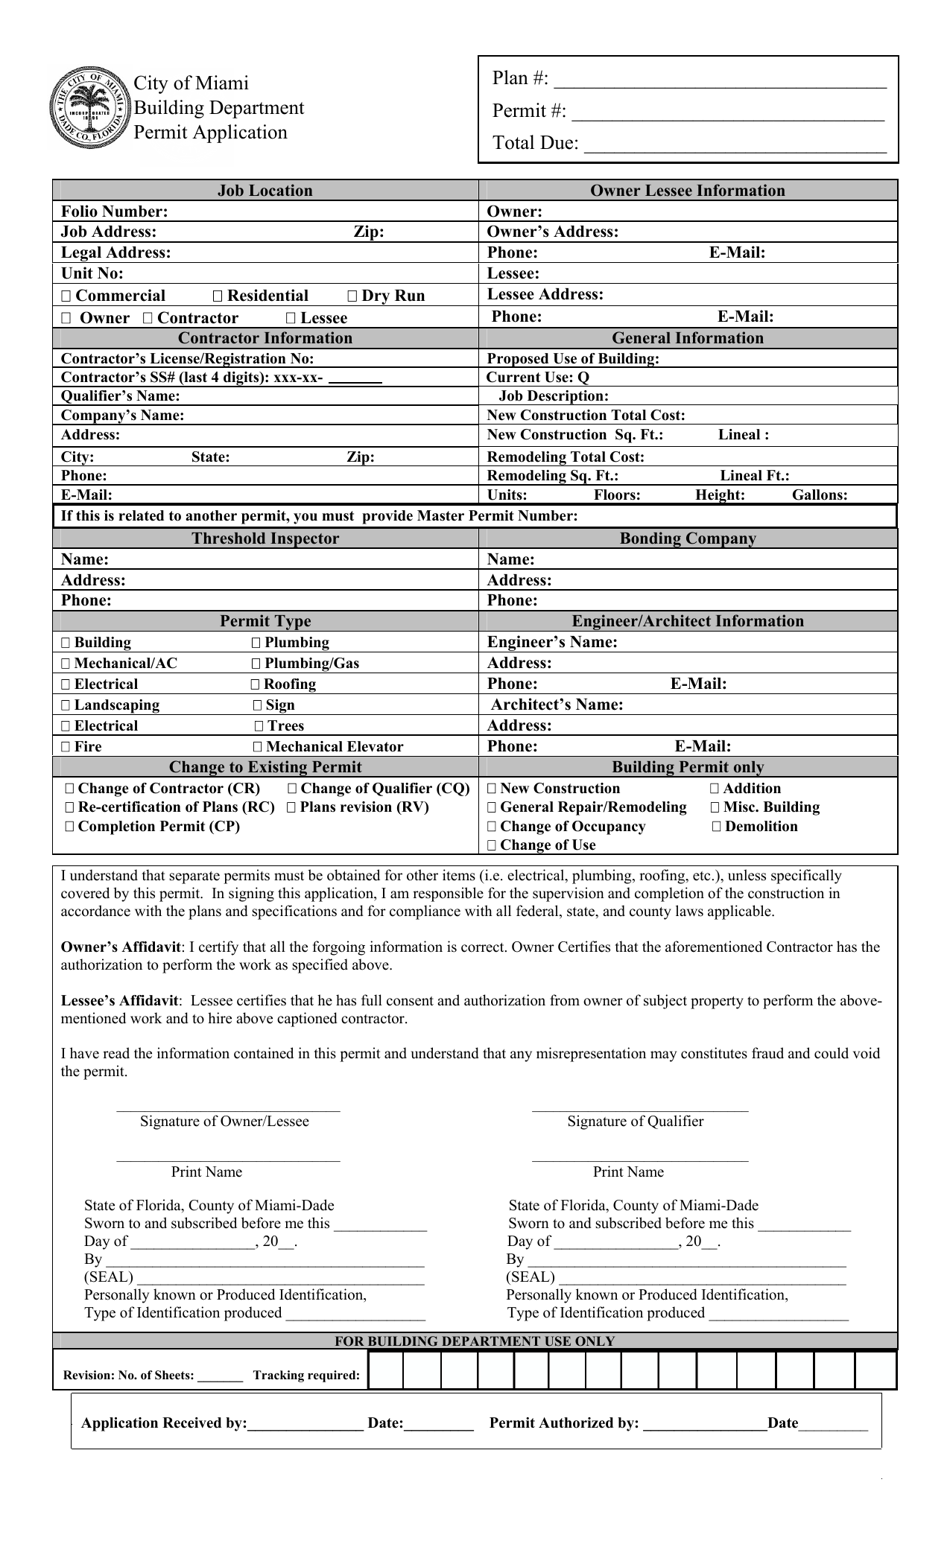 Permit Application - City of Miami, Florida, Page 1